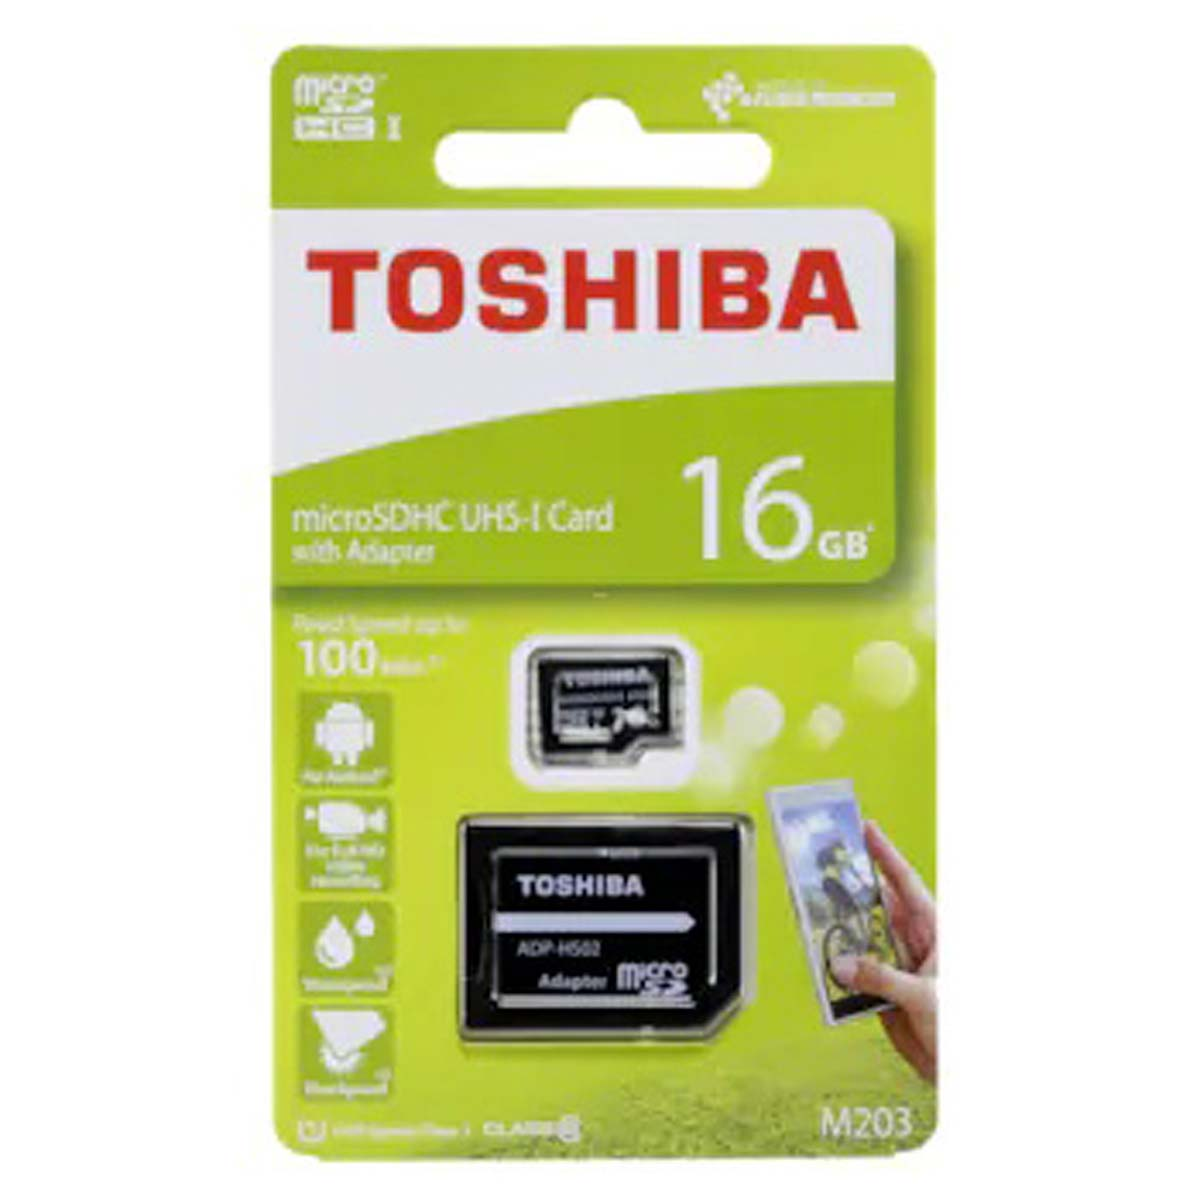 41094, Mbit/s GB, Speicherkarte, 16 Micro-SDHC 100 TOSHIBA